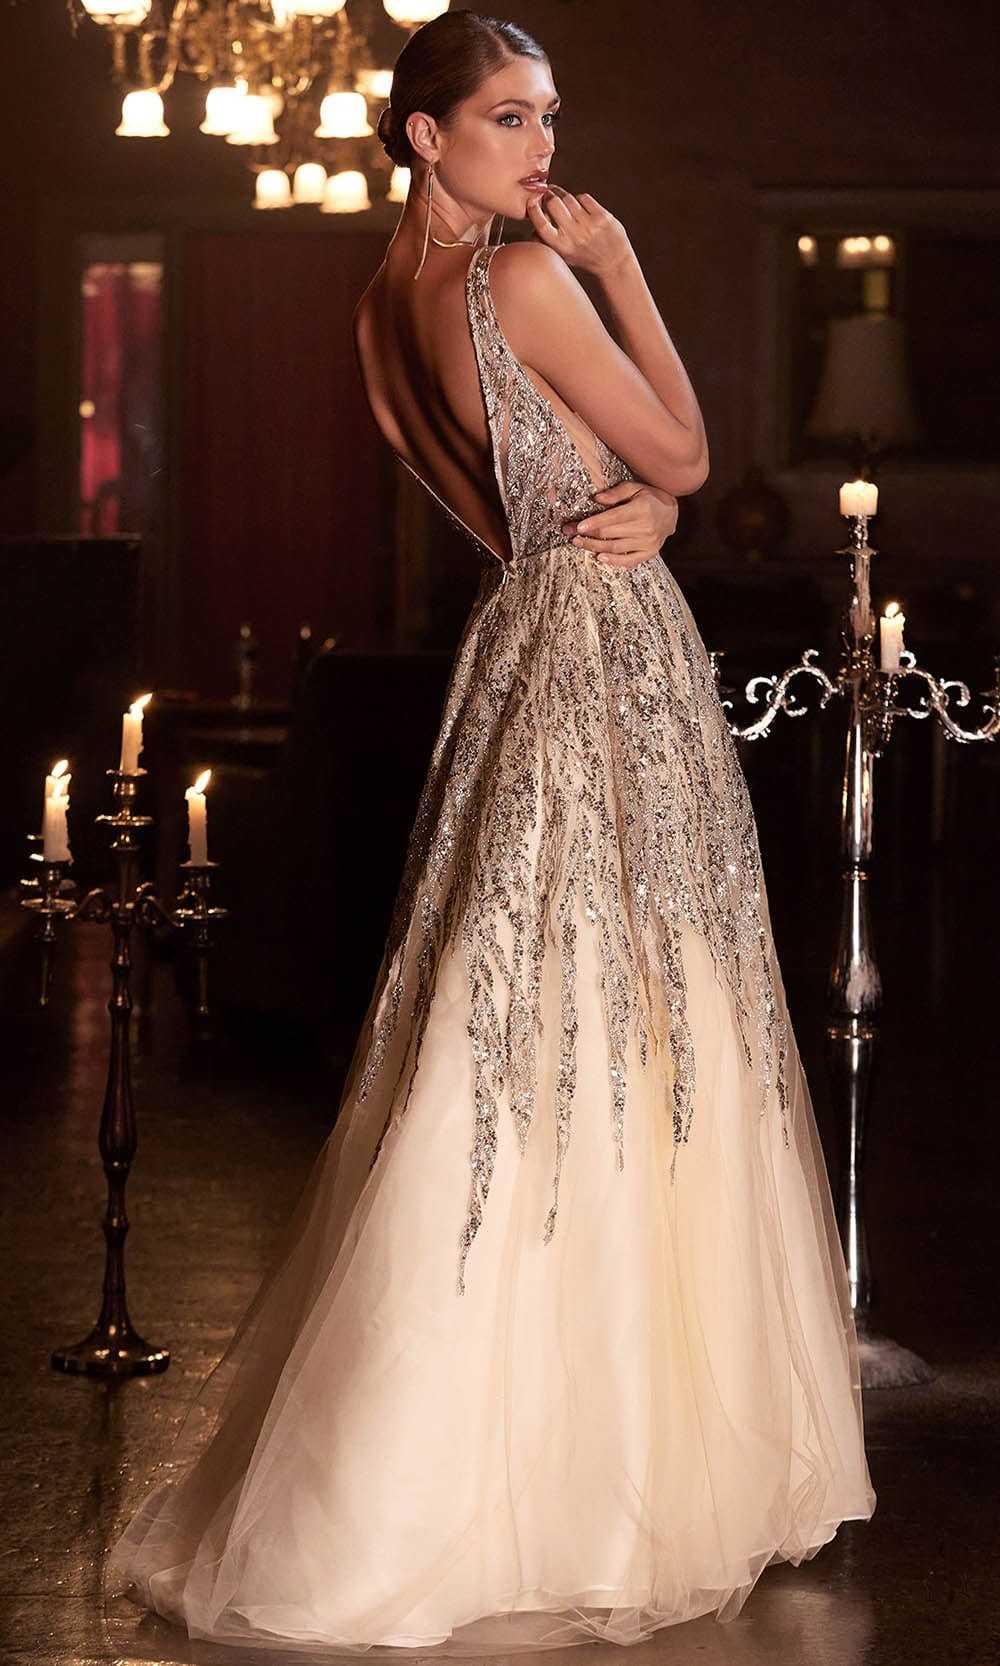 Cinderella Divine, Cinderella Divine C135 - Sequin Sleeveless Prom Dress